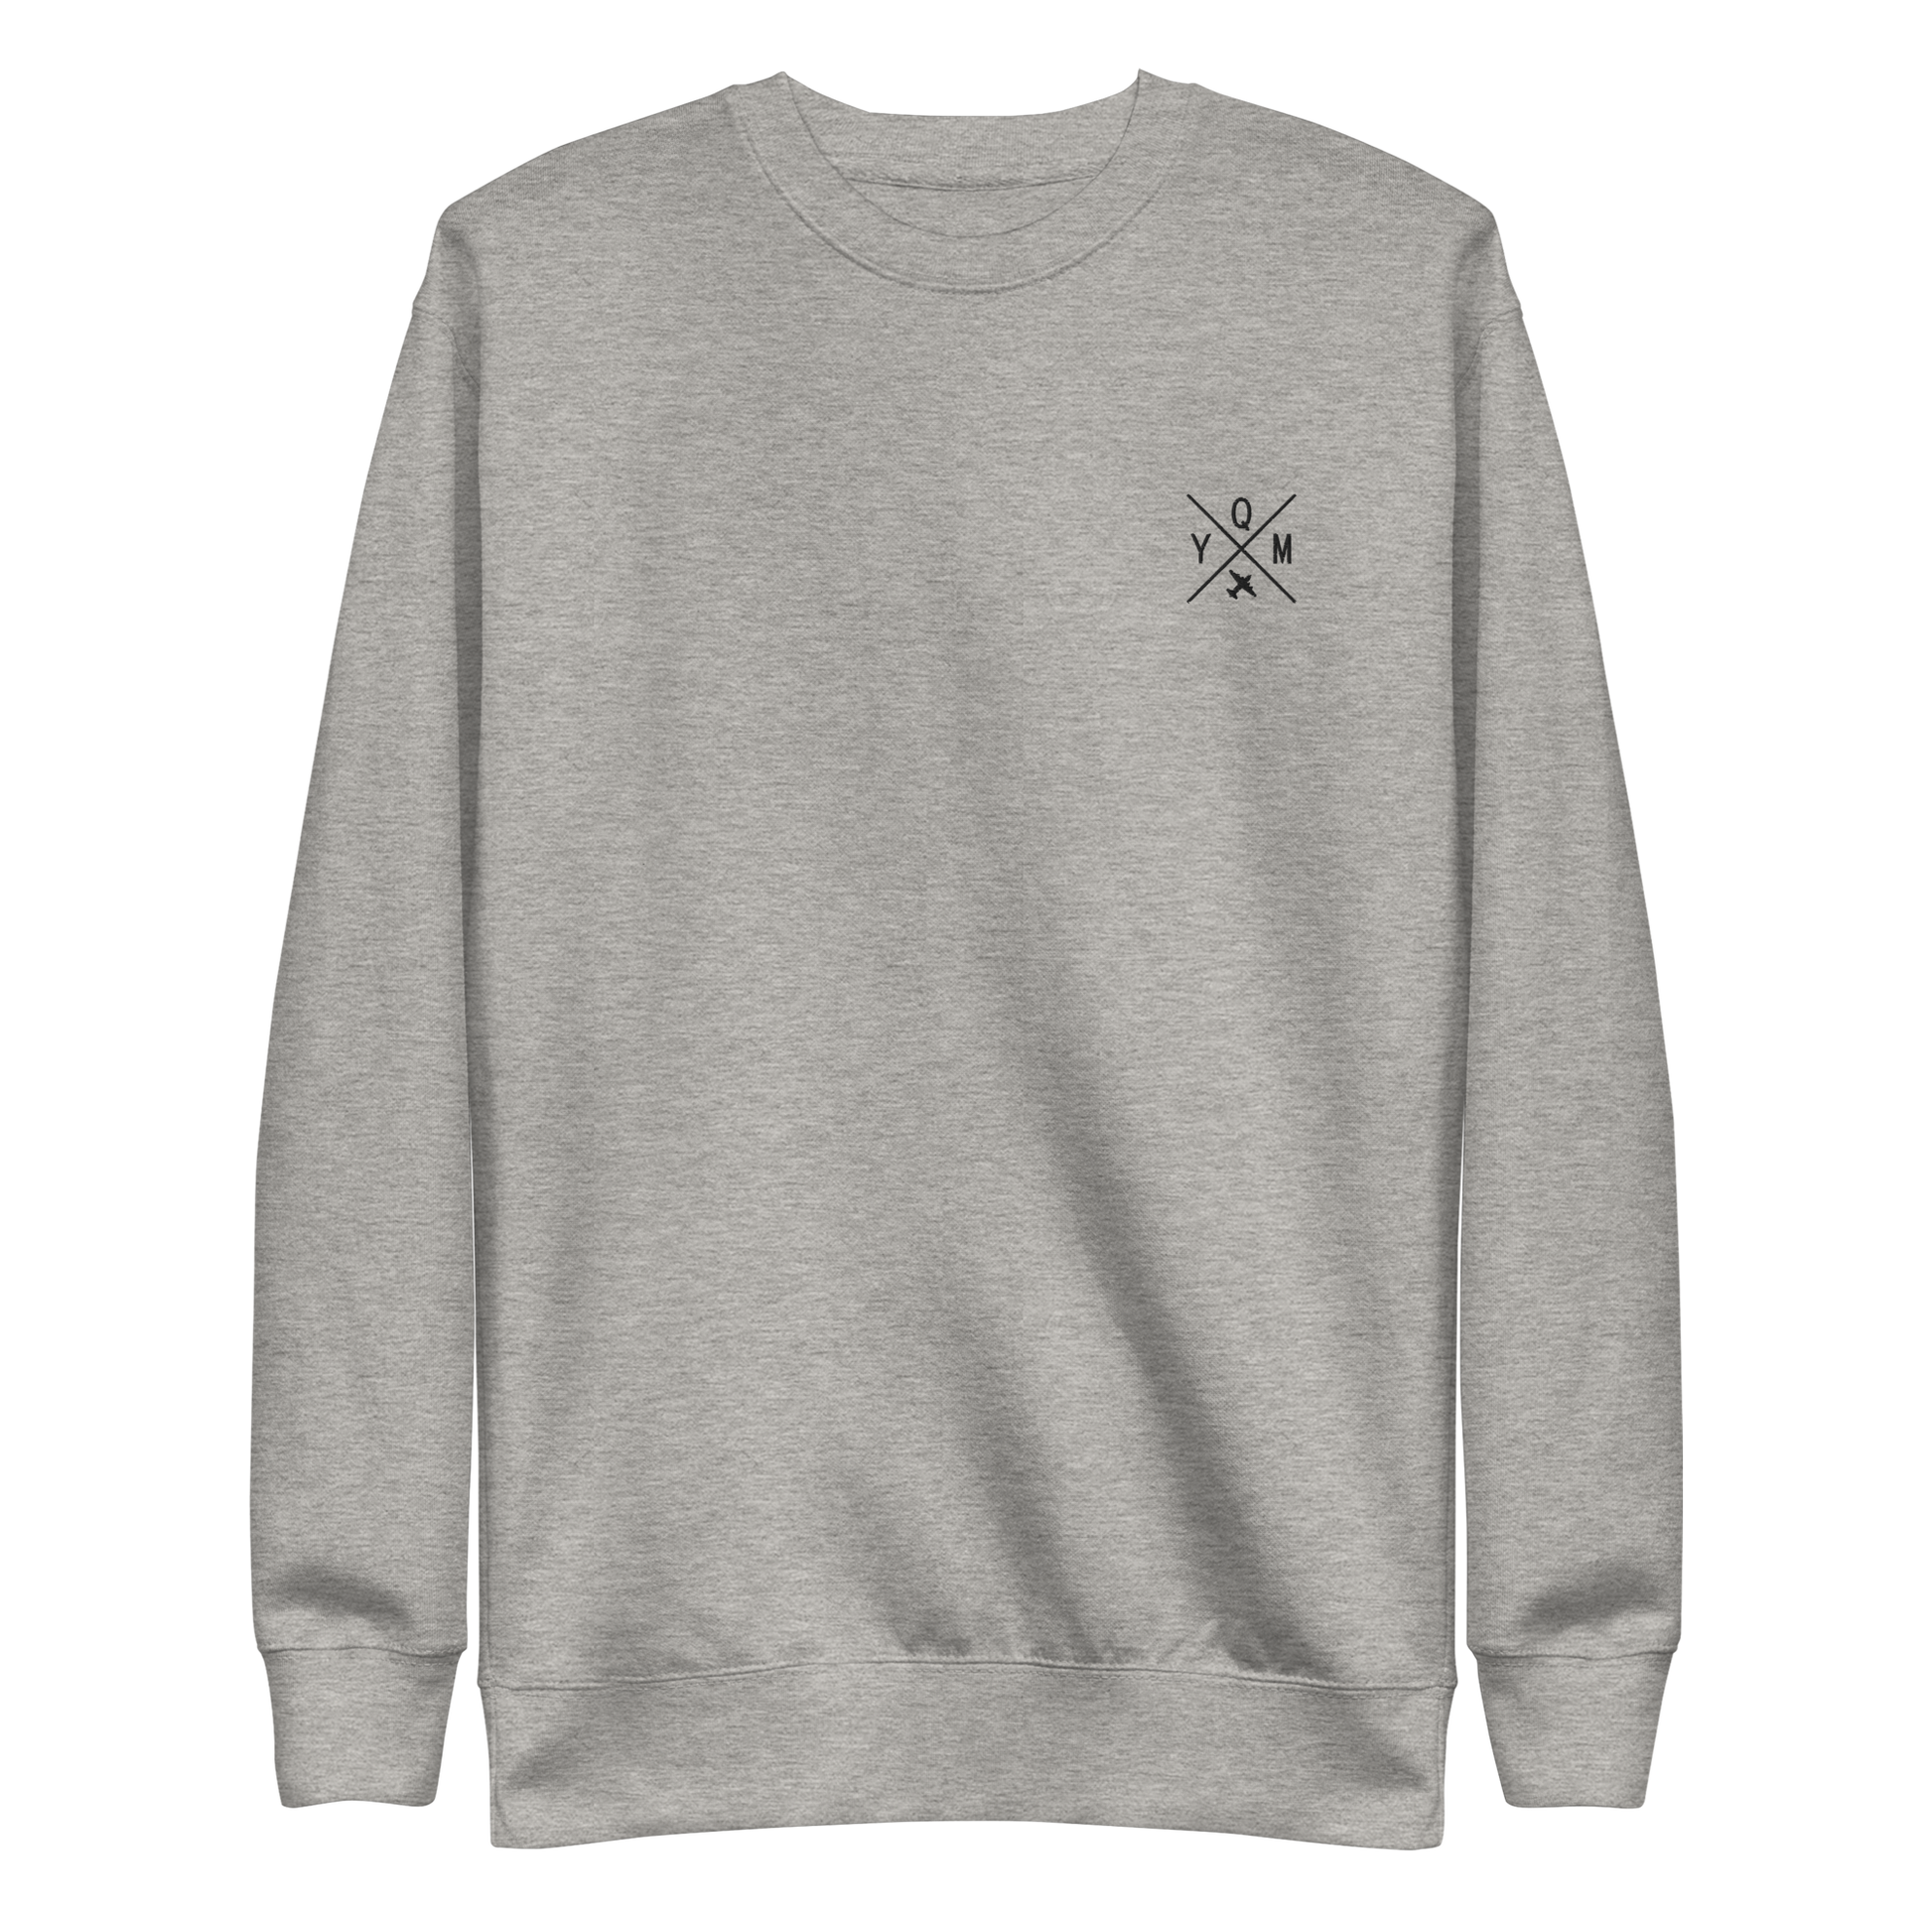 YHM Designs - YQM Moncton Premium Sweatshirt - Crossed-X Design with Airport Code and Vintage Propliner - Black Embroidery - Image 02